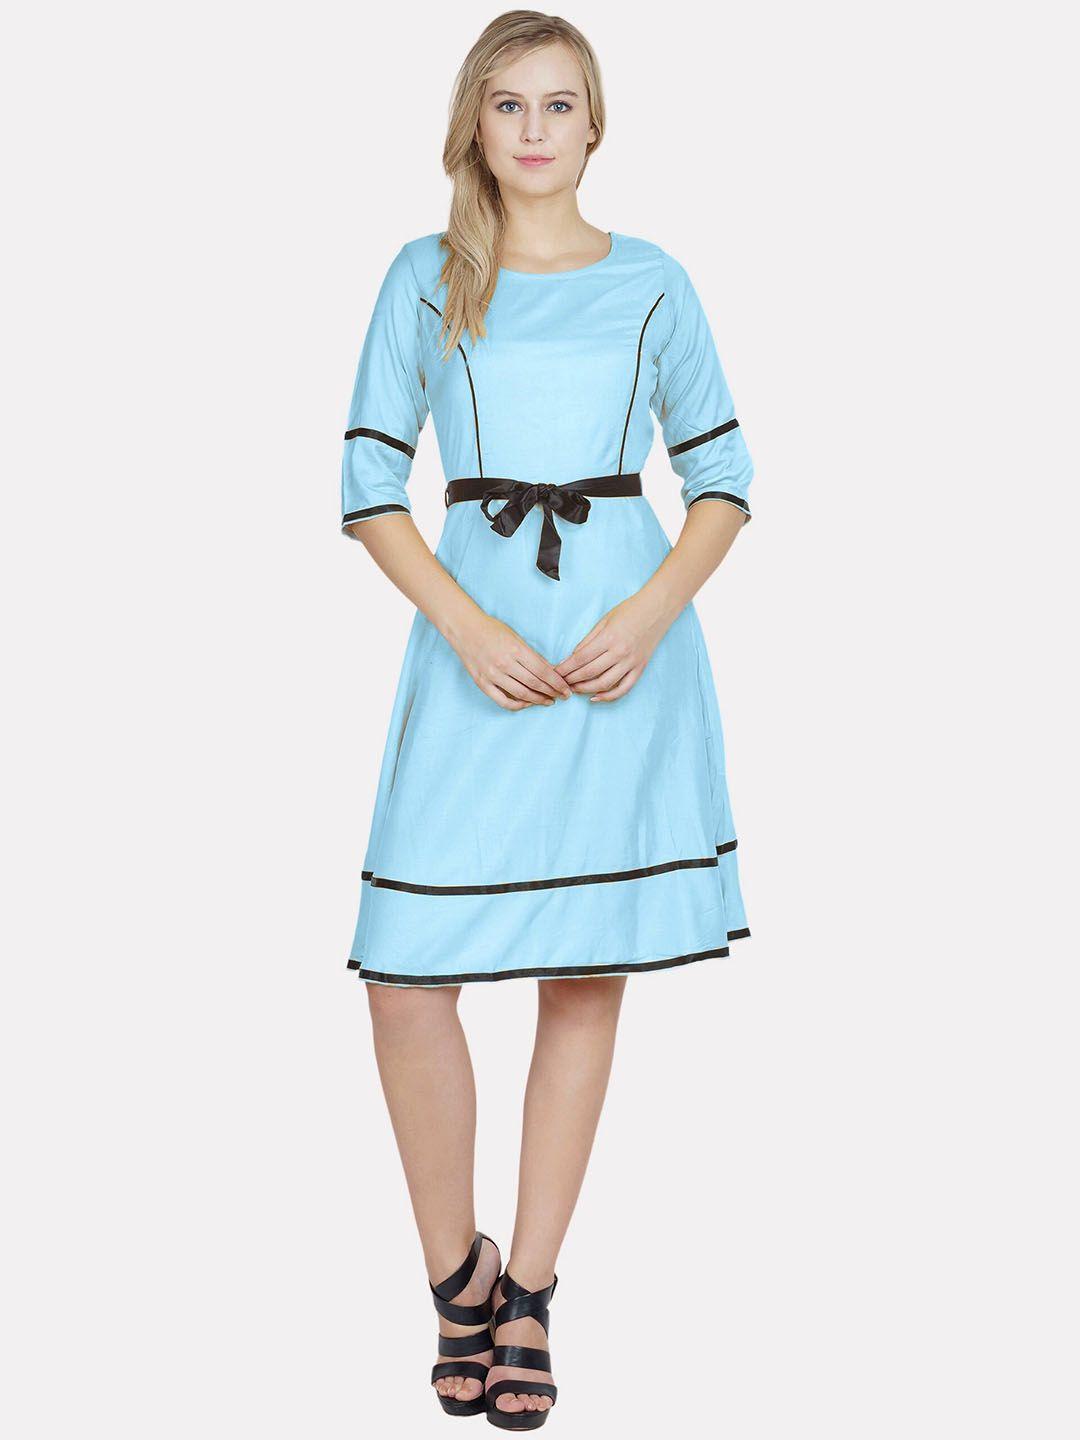 patrorna-a-line-cotton-dress